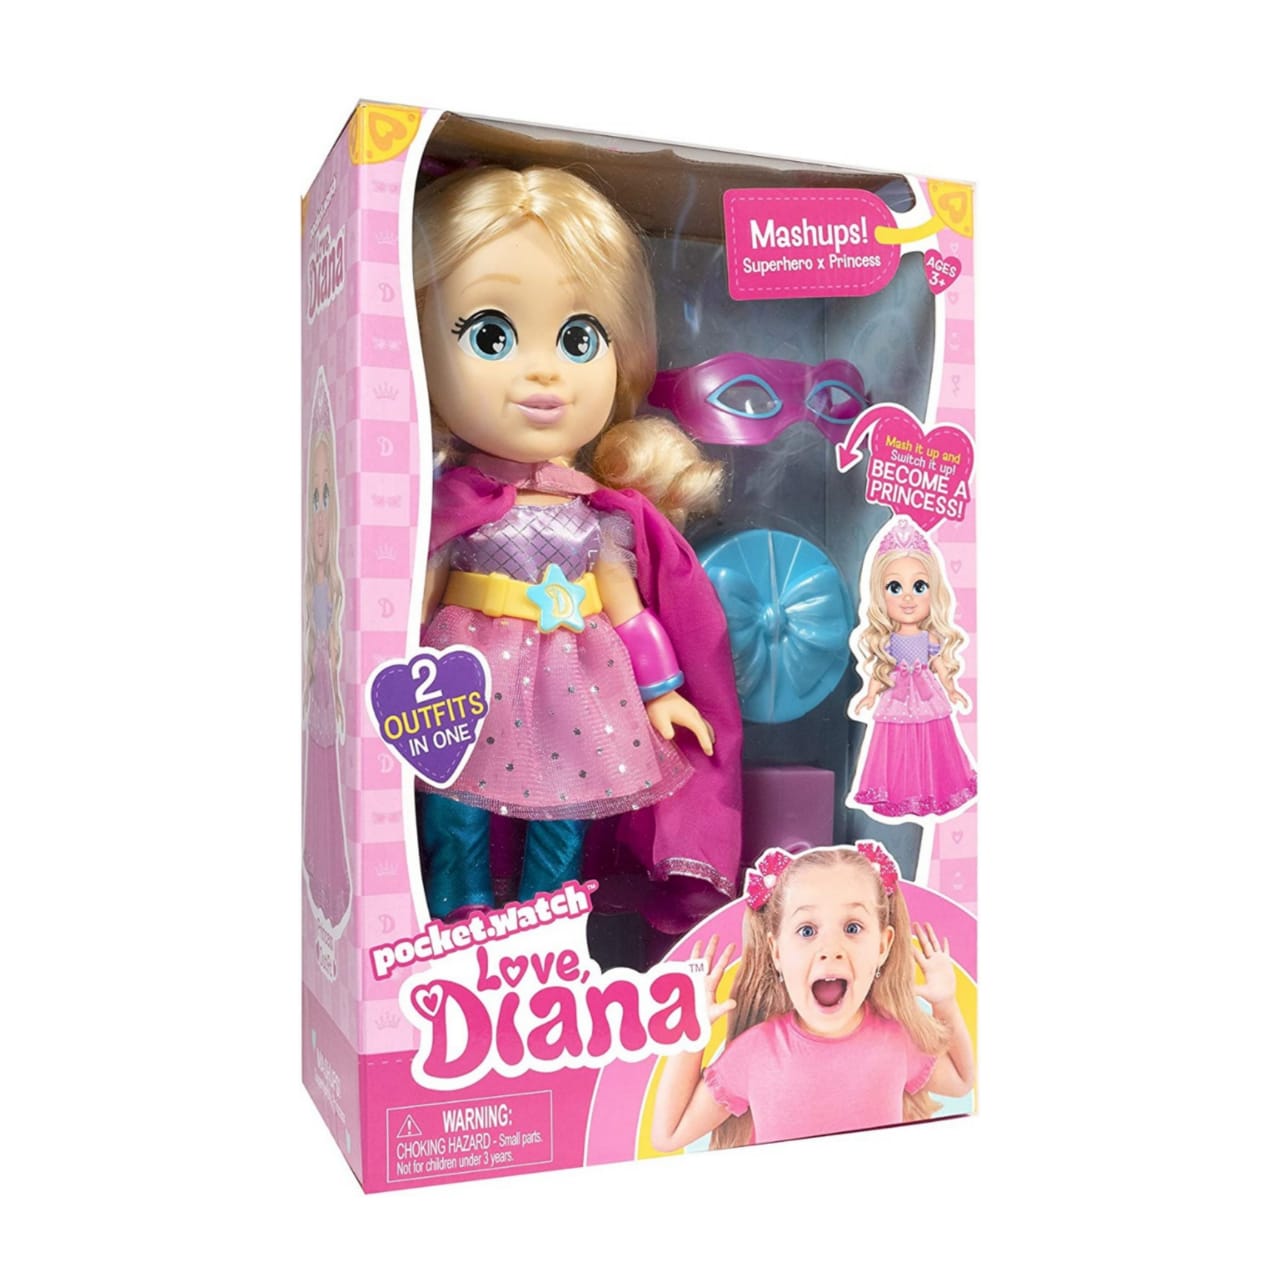 LOVE DIANA Mashups 13" Doll SUPERHERO to PRINCESS Outfits PocketWatch NEW 